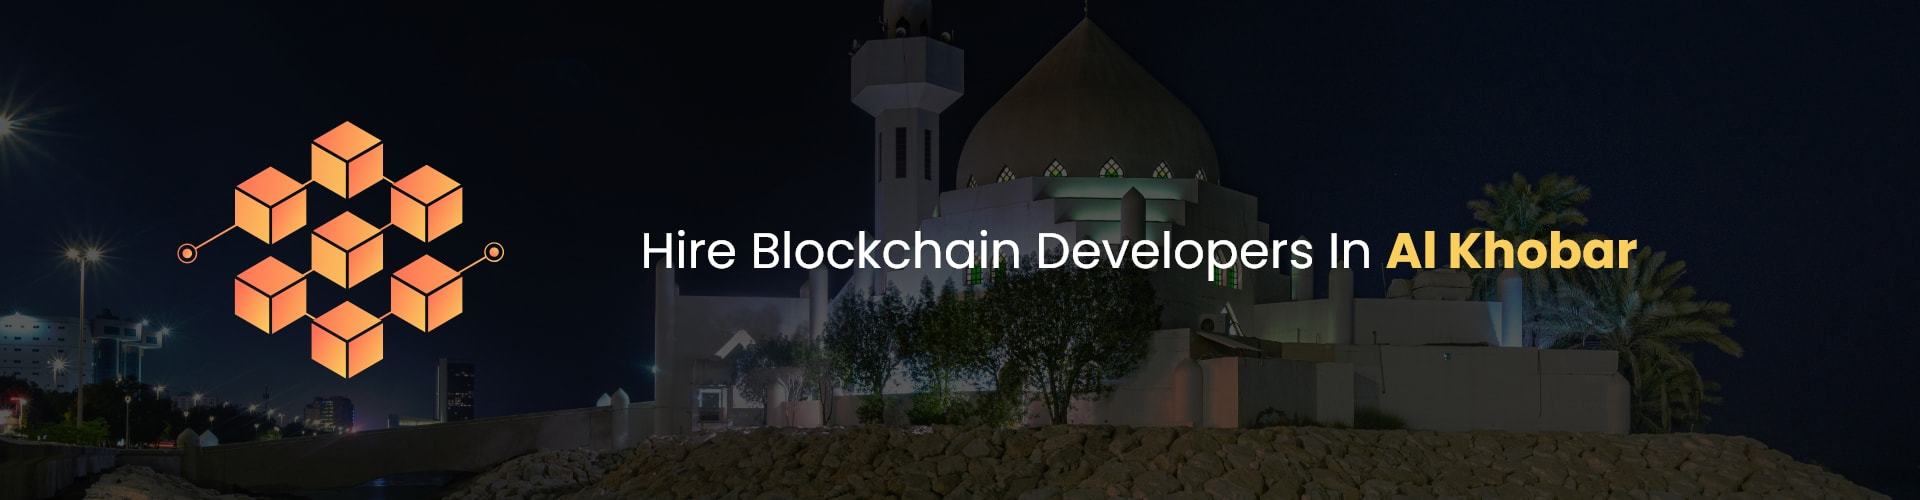 hire blockchain developers in Al Khobar